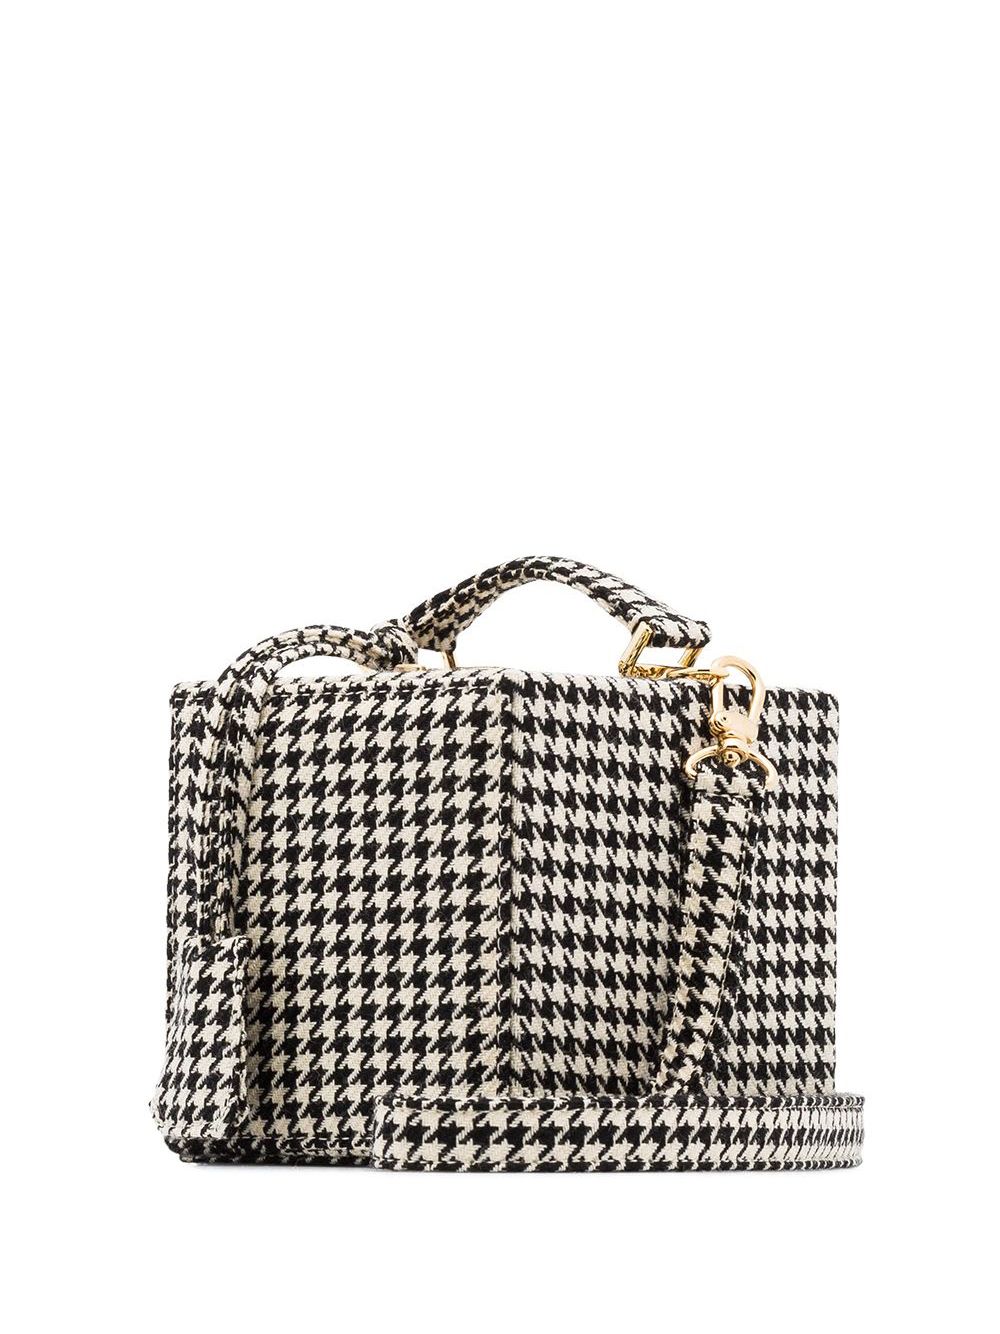 Natasha Zinko black and white tweed wool box bag - FARFETCH